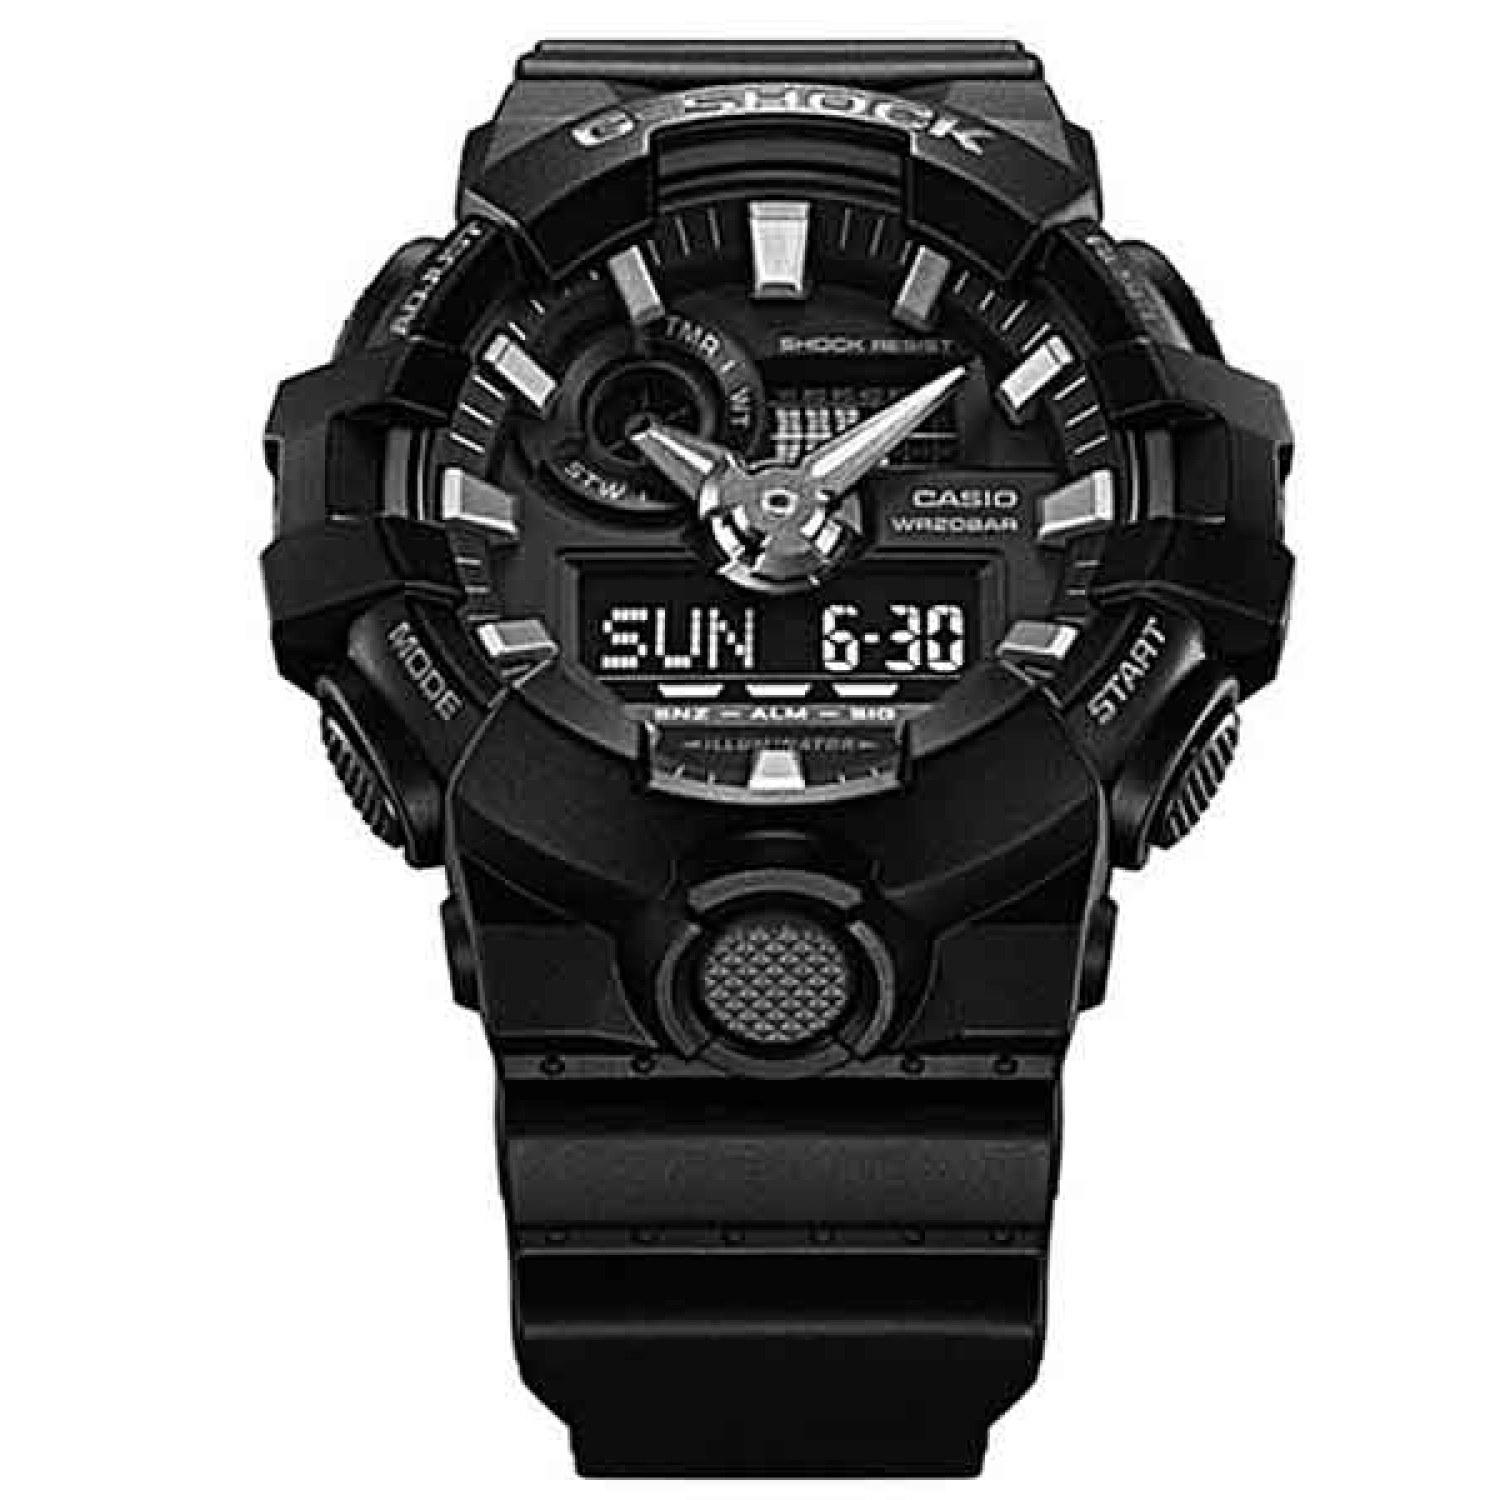 GA700-1B G-SHOCK  Analogue Digital.casio watches nz sale $269.00